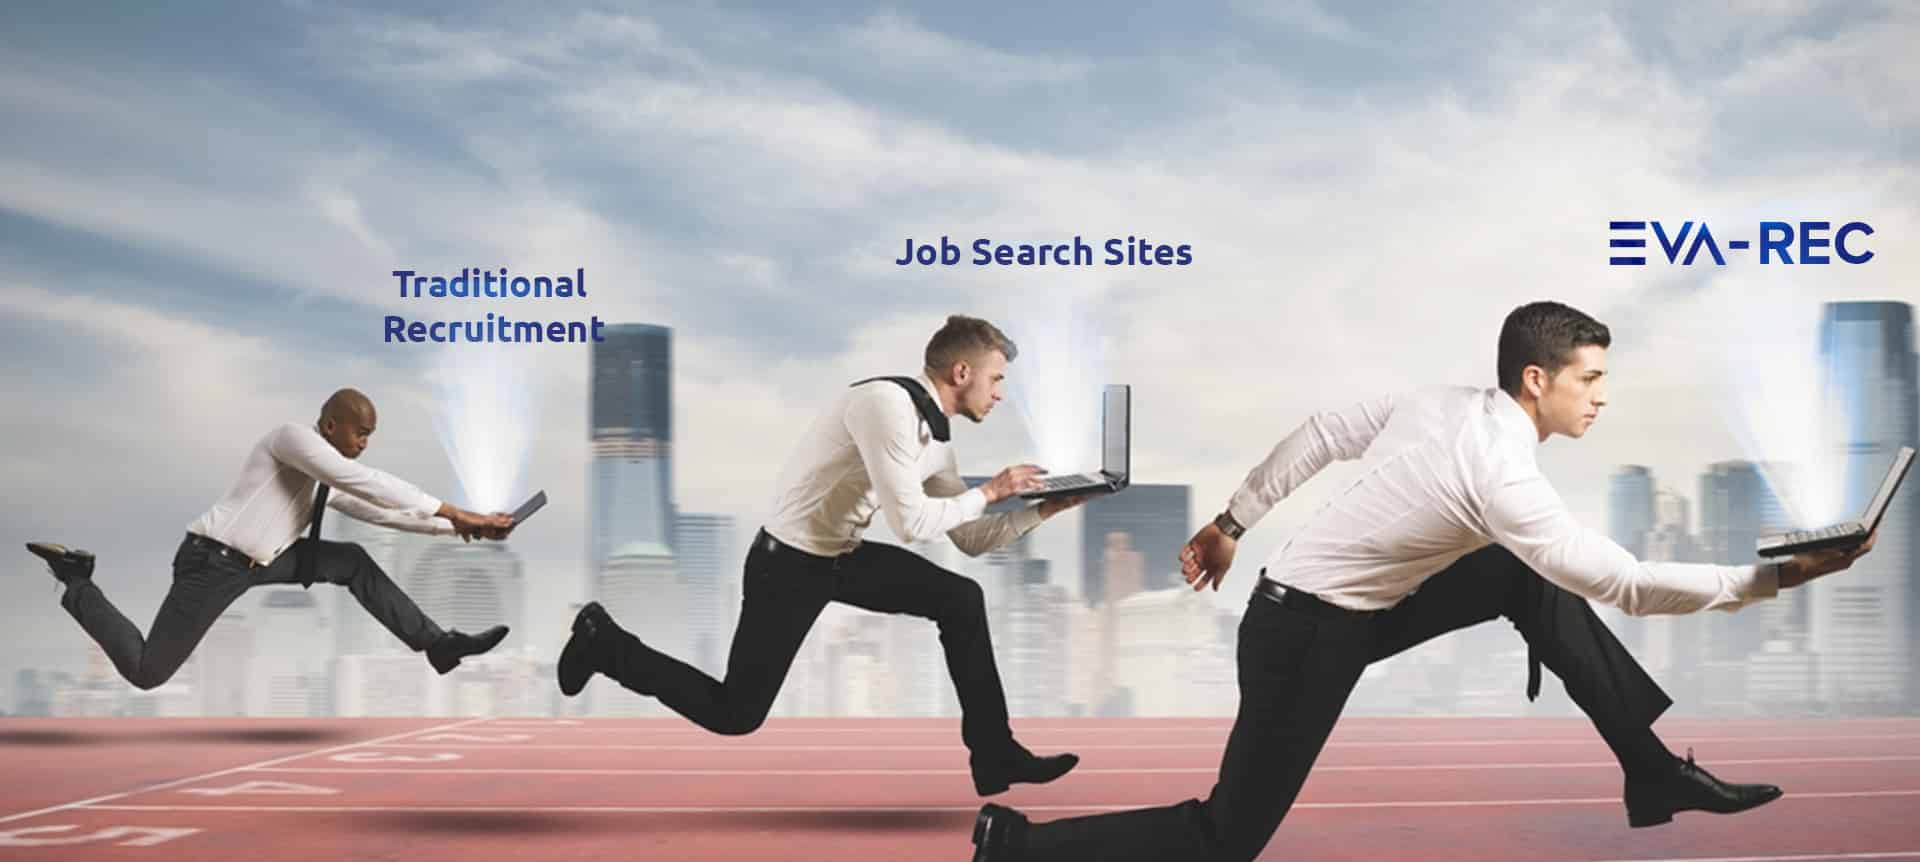 recruiters using a hiring platform